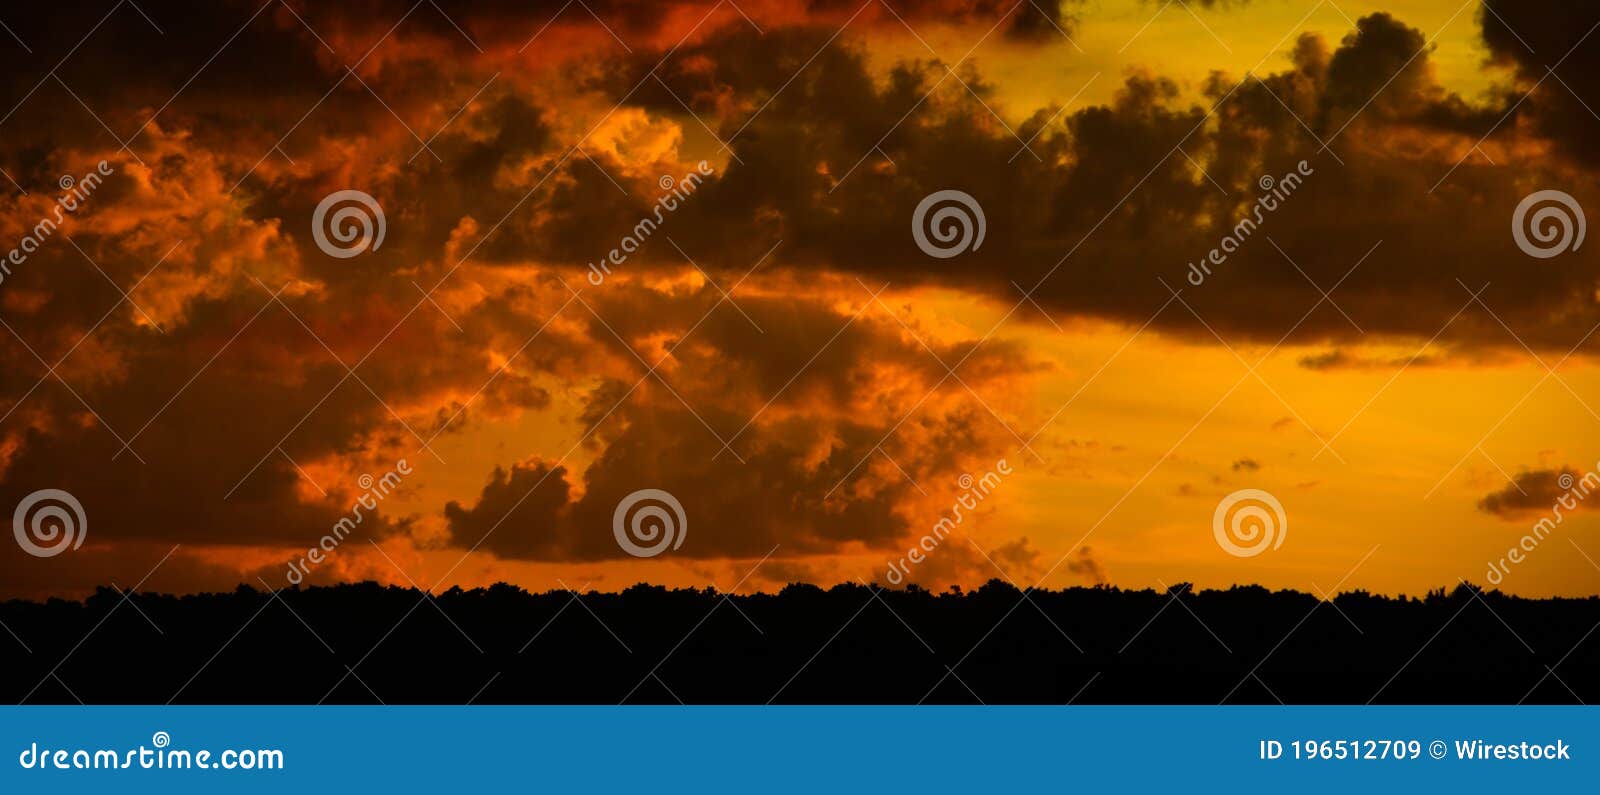 cumulus and cumulonimbus clouds at sunset